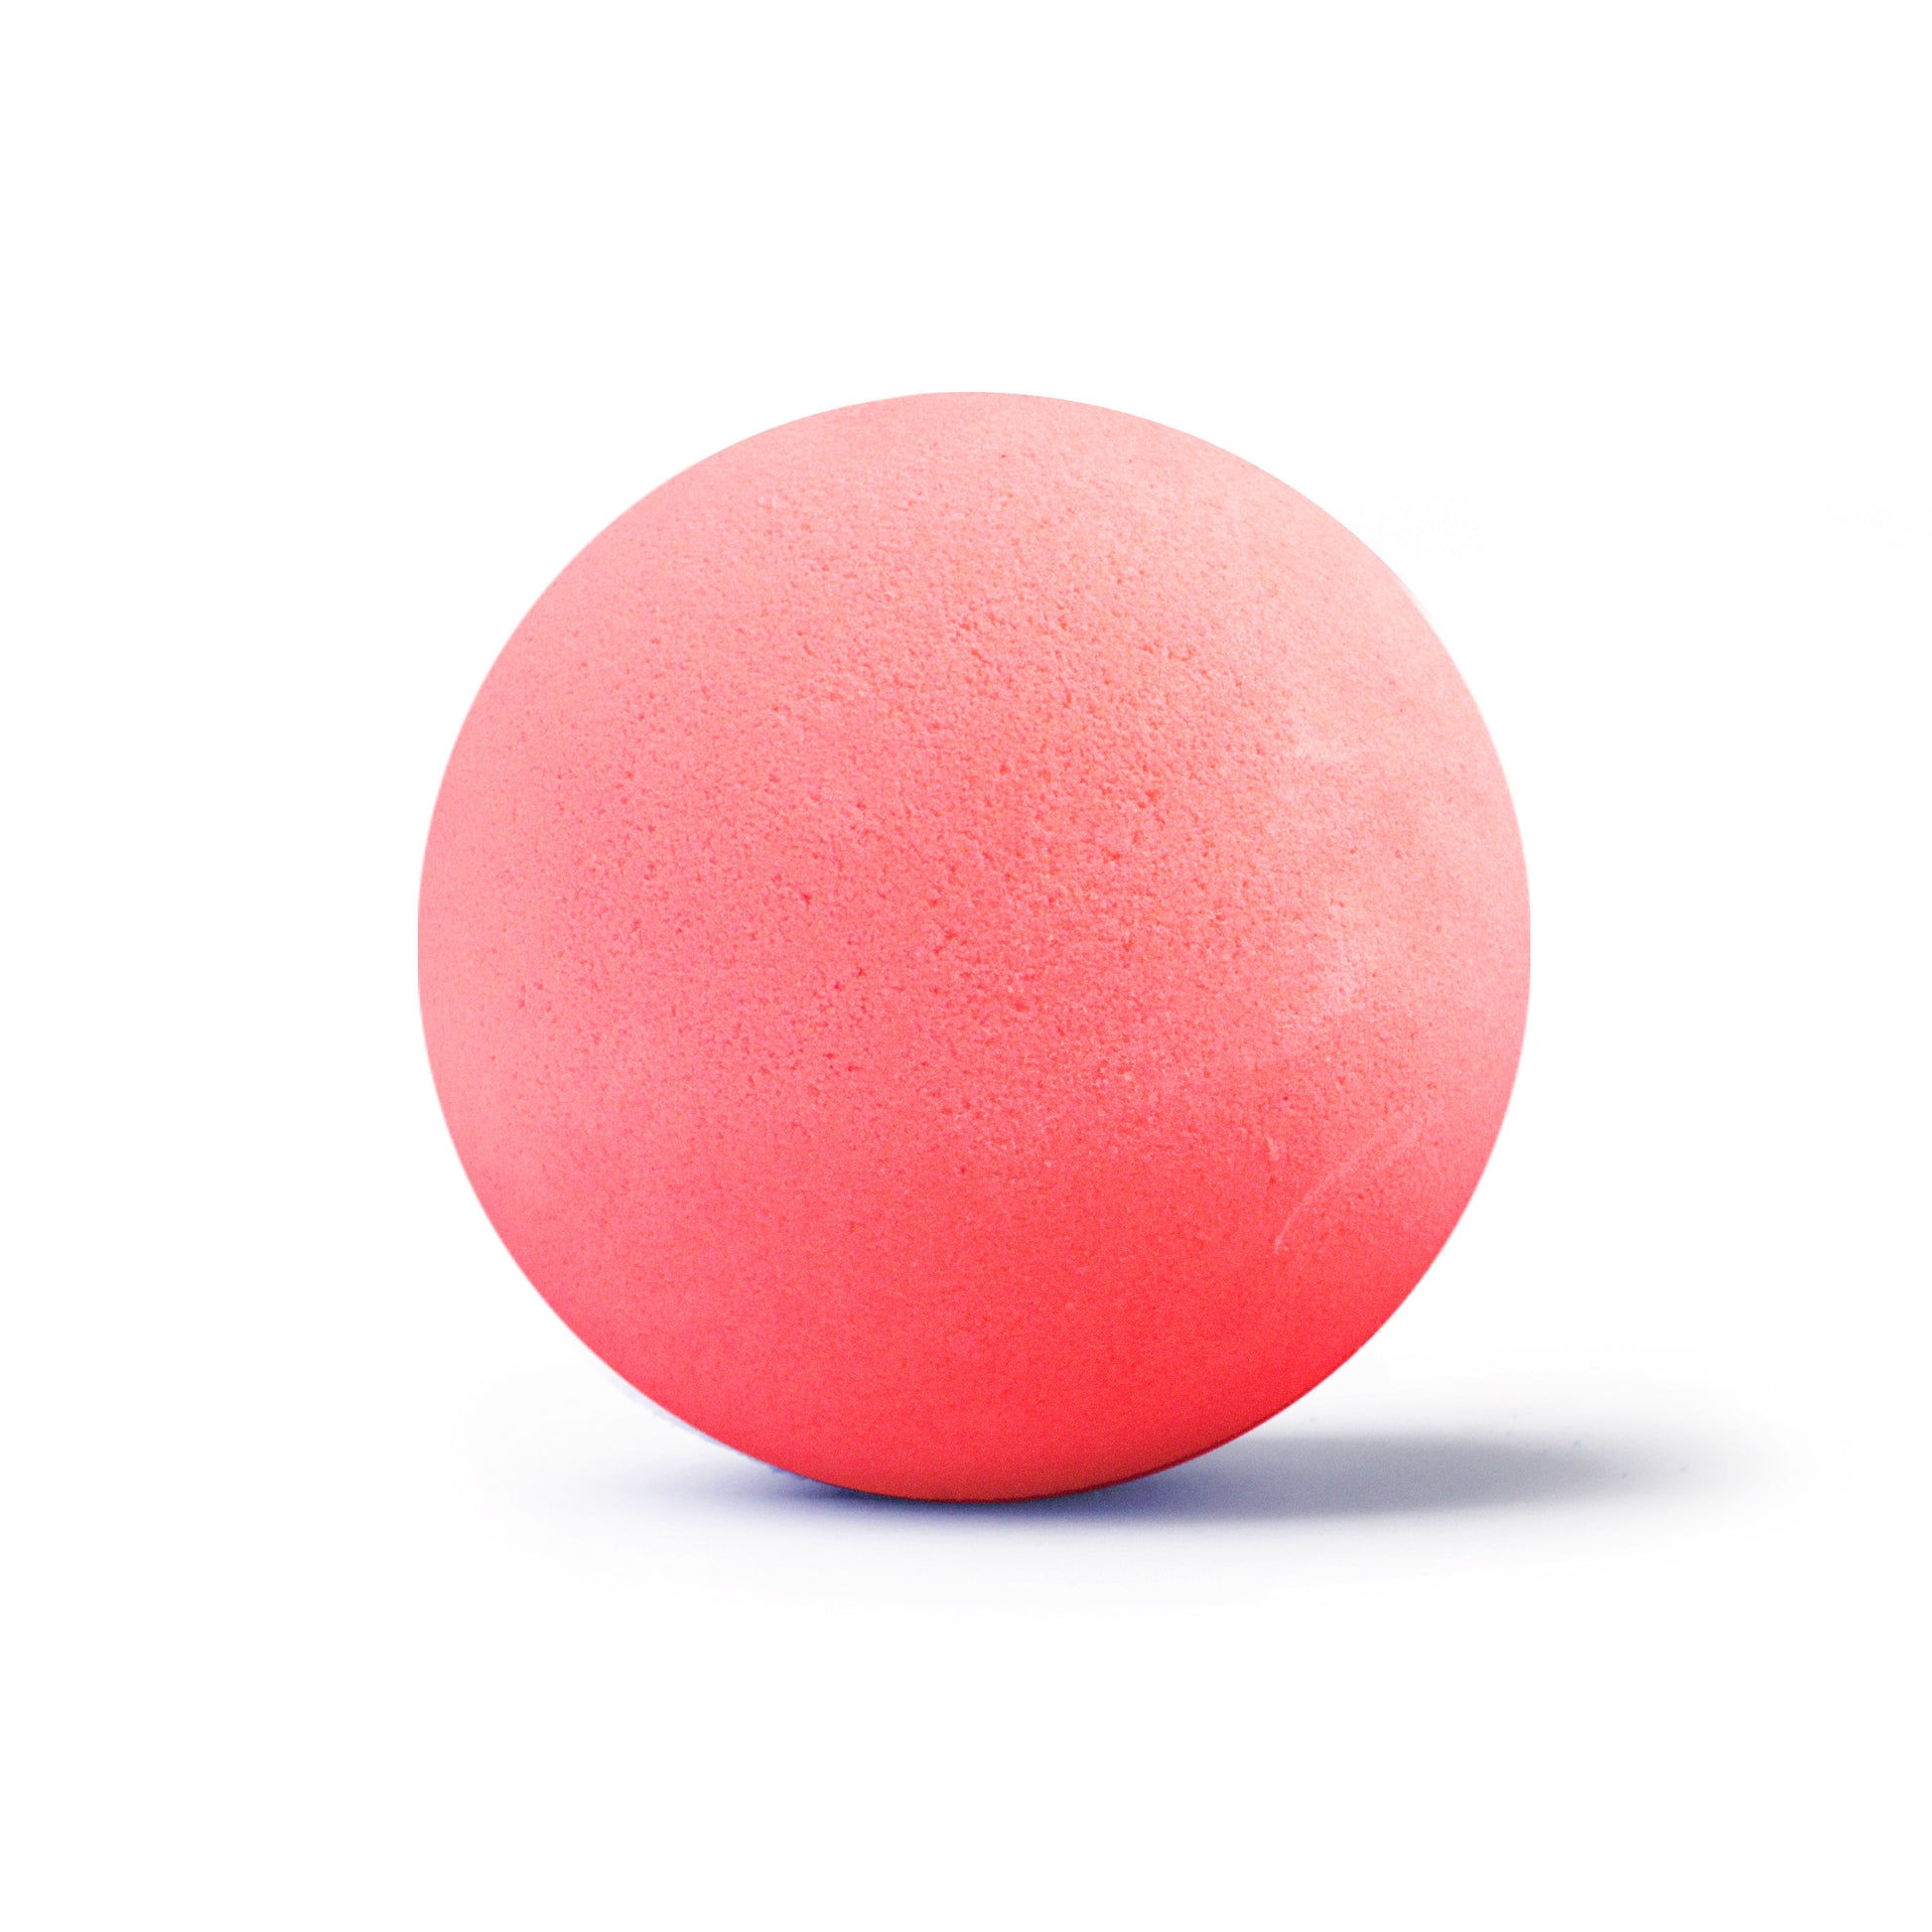 a pink bath bomb